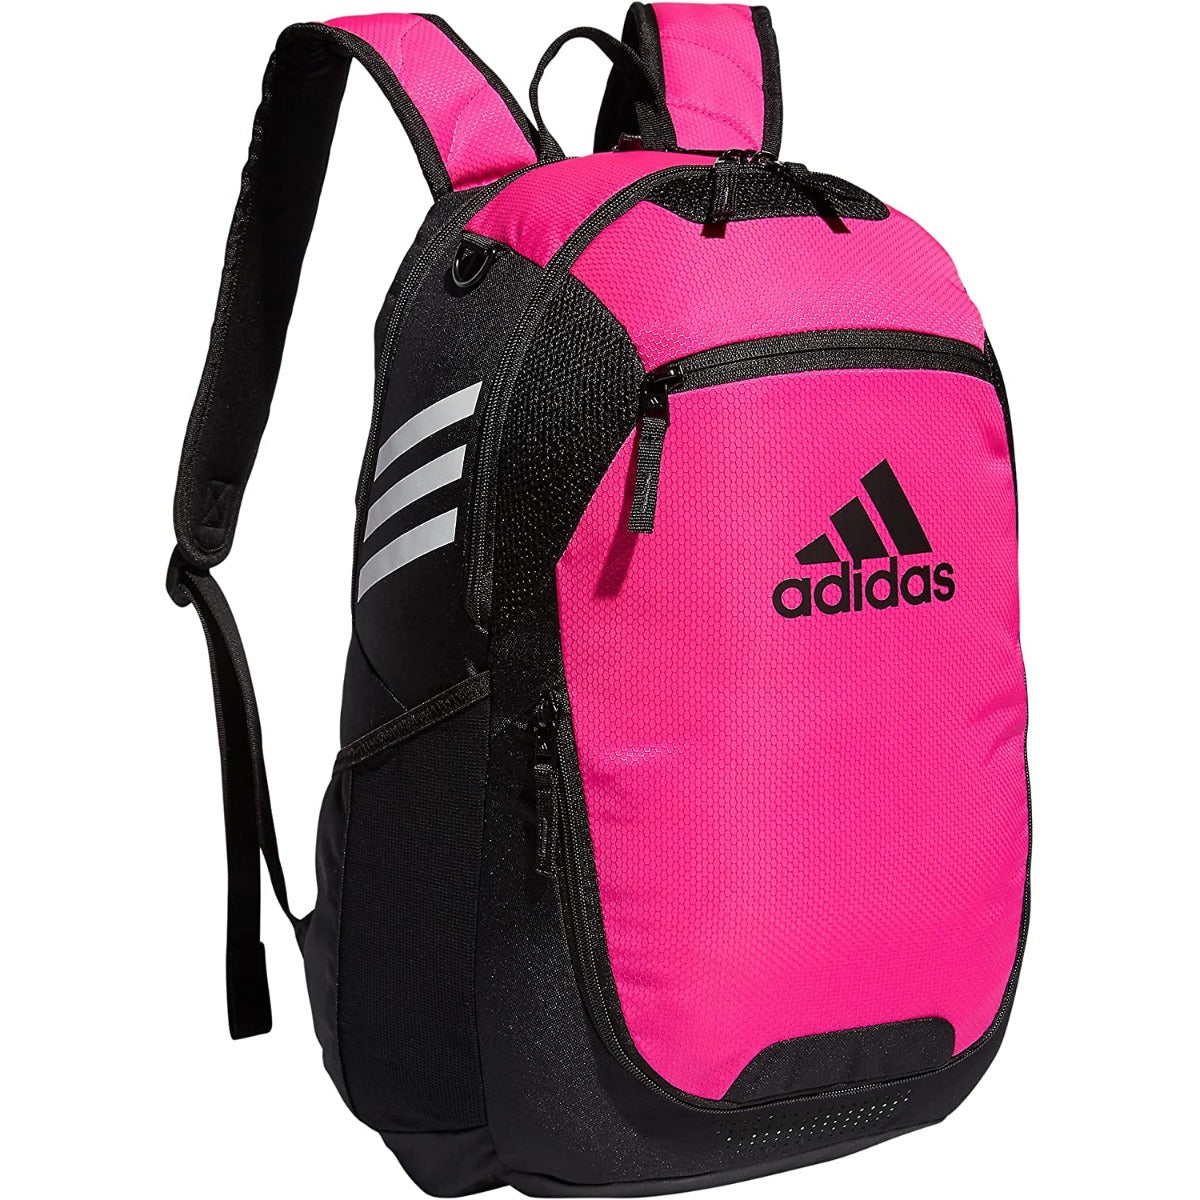 adidas Stadium 3 Backpack Shock Pink (Front)